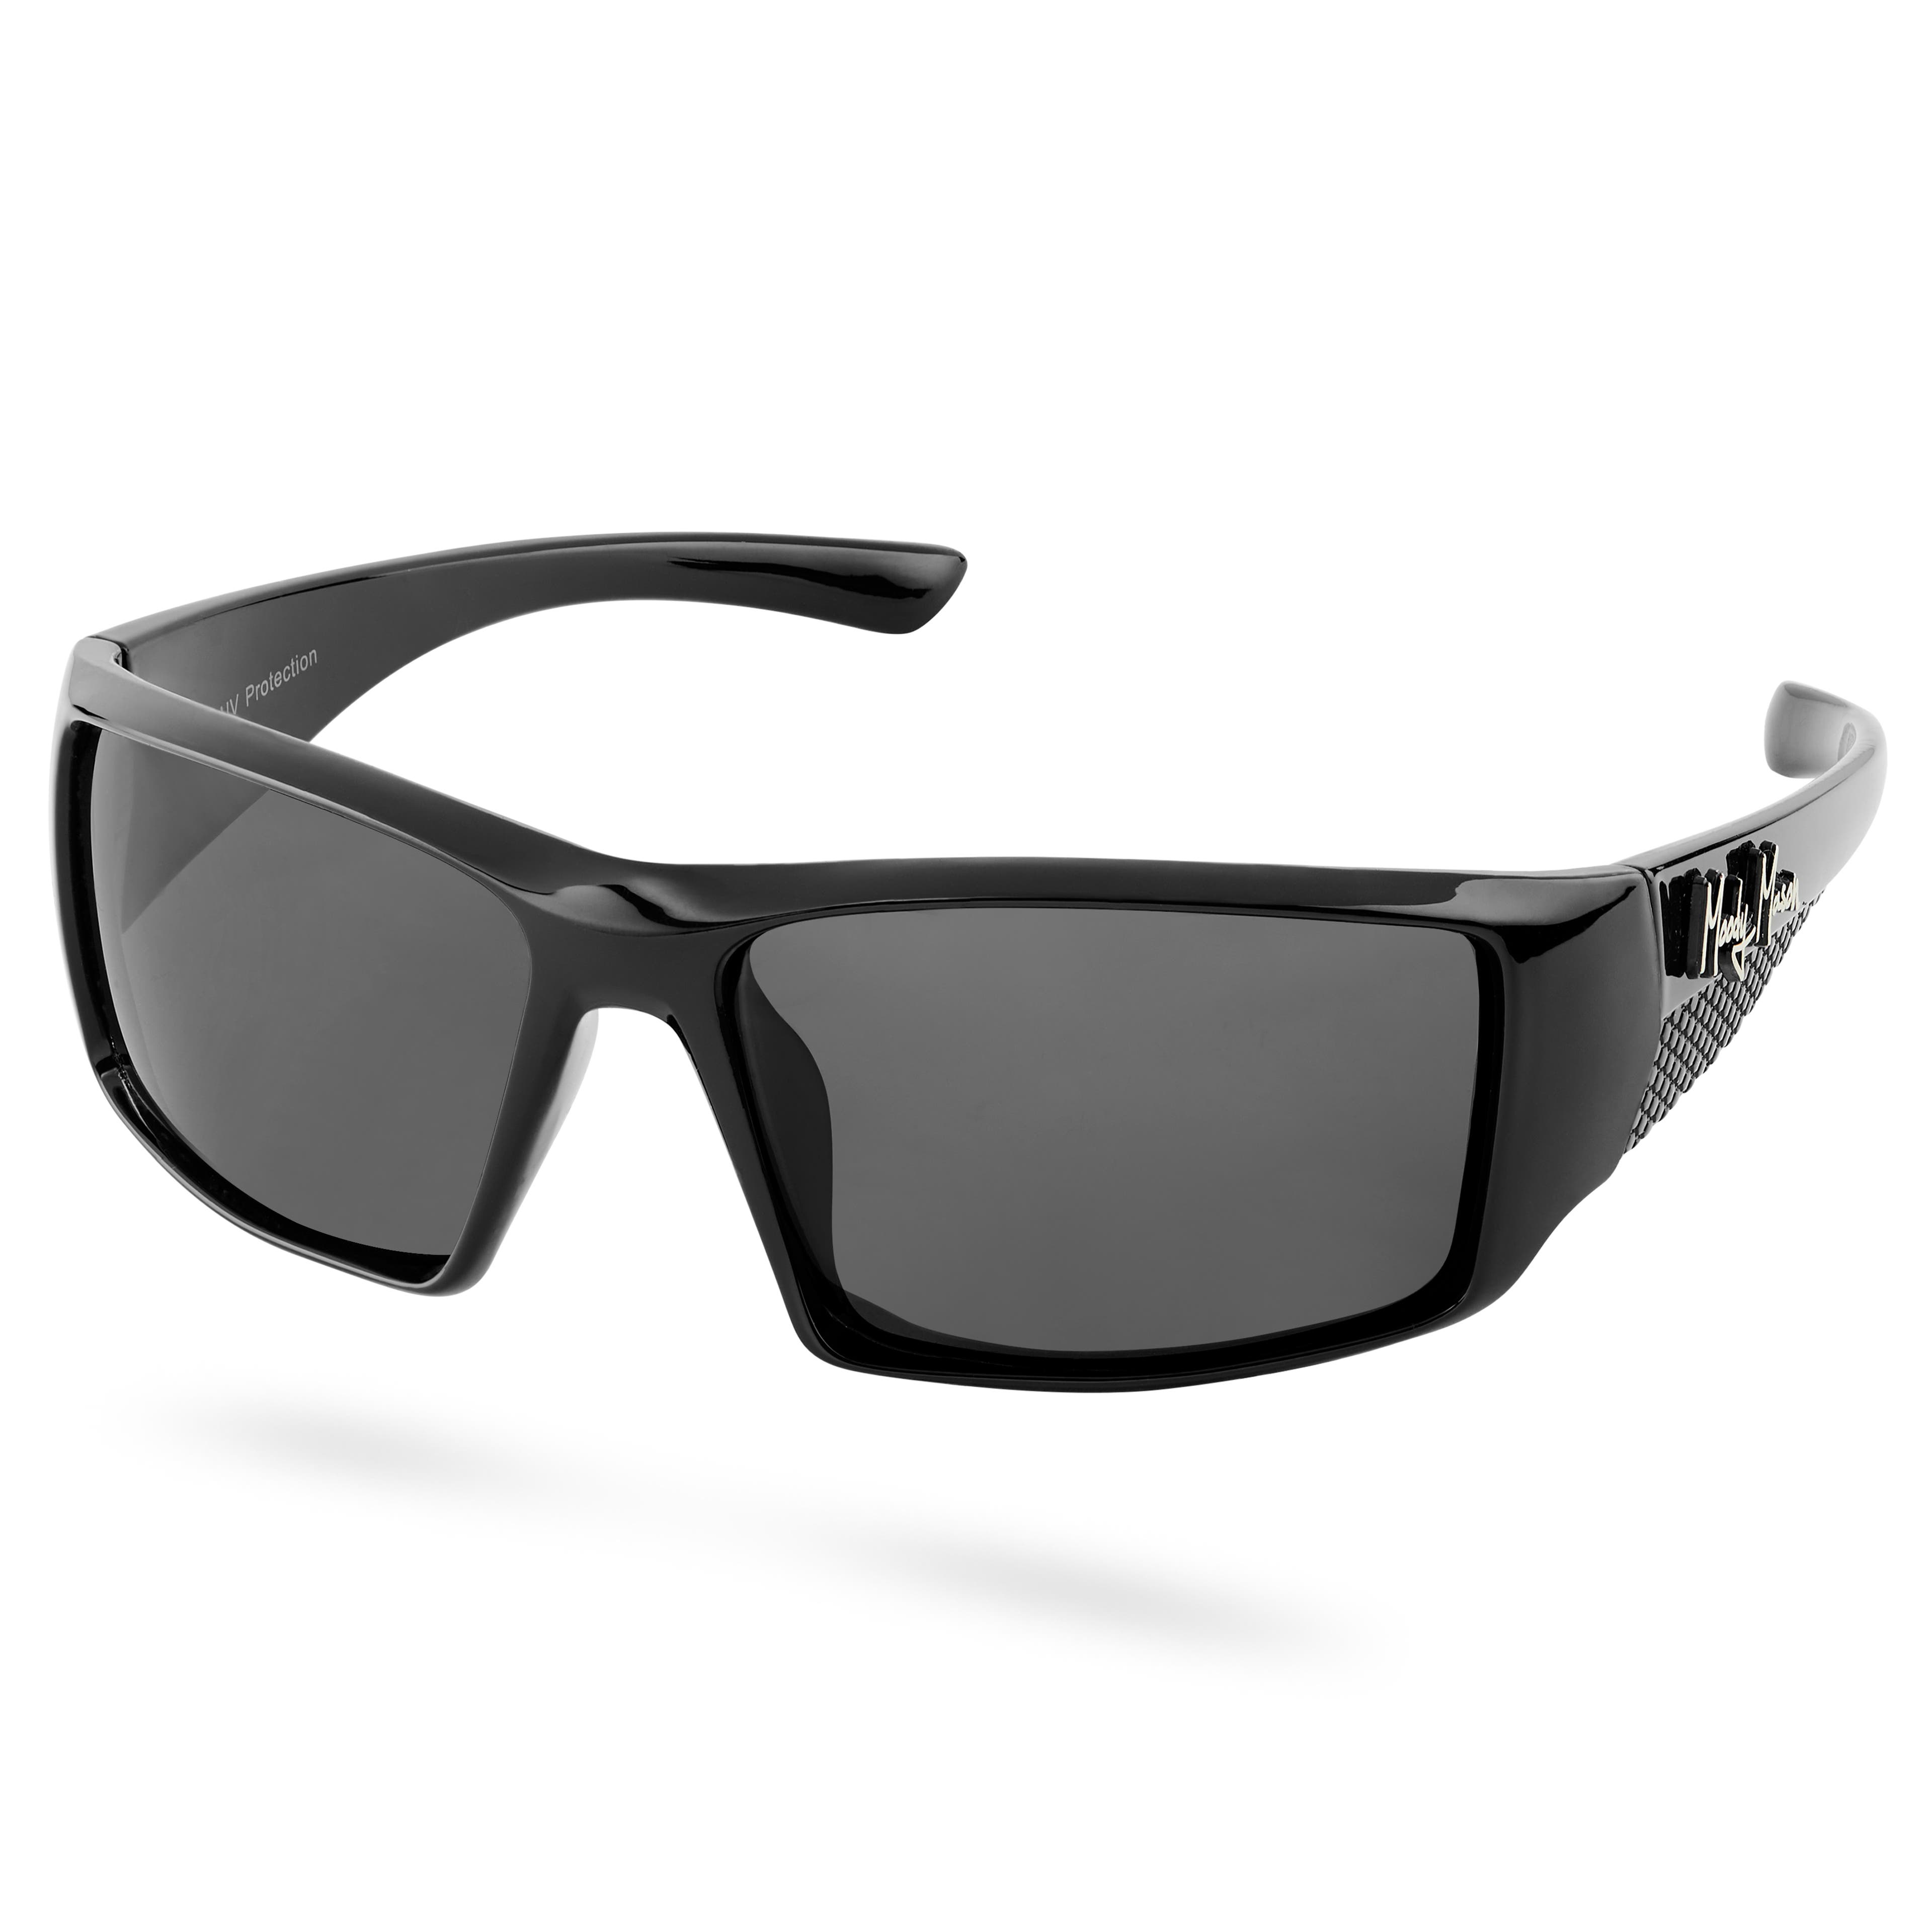 Black & Black Sporty Sunglasses